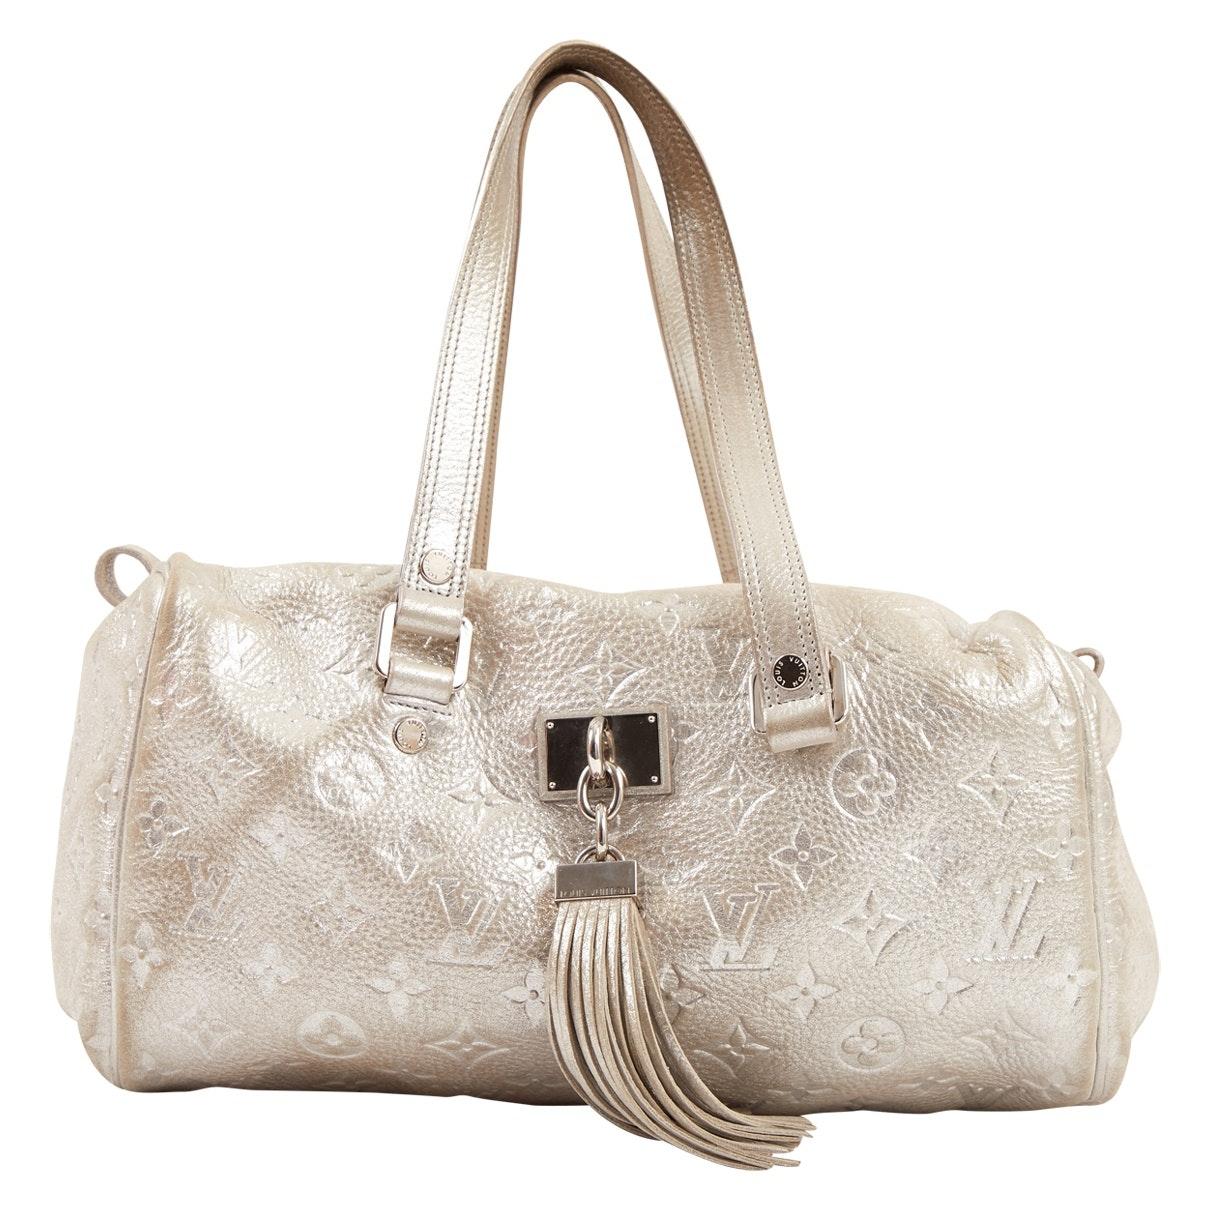 Louis Vuitton Silver Leather Handbag in Metallic - Lyst